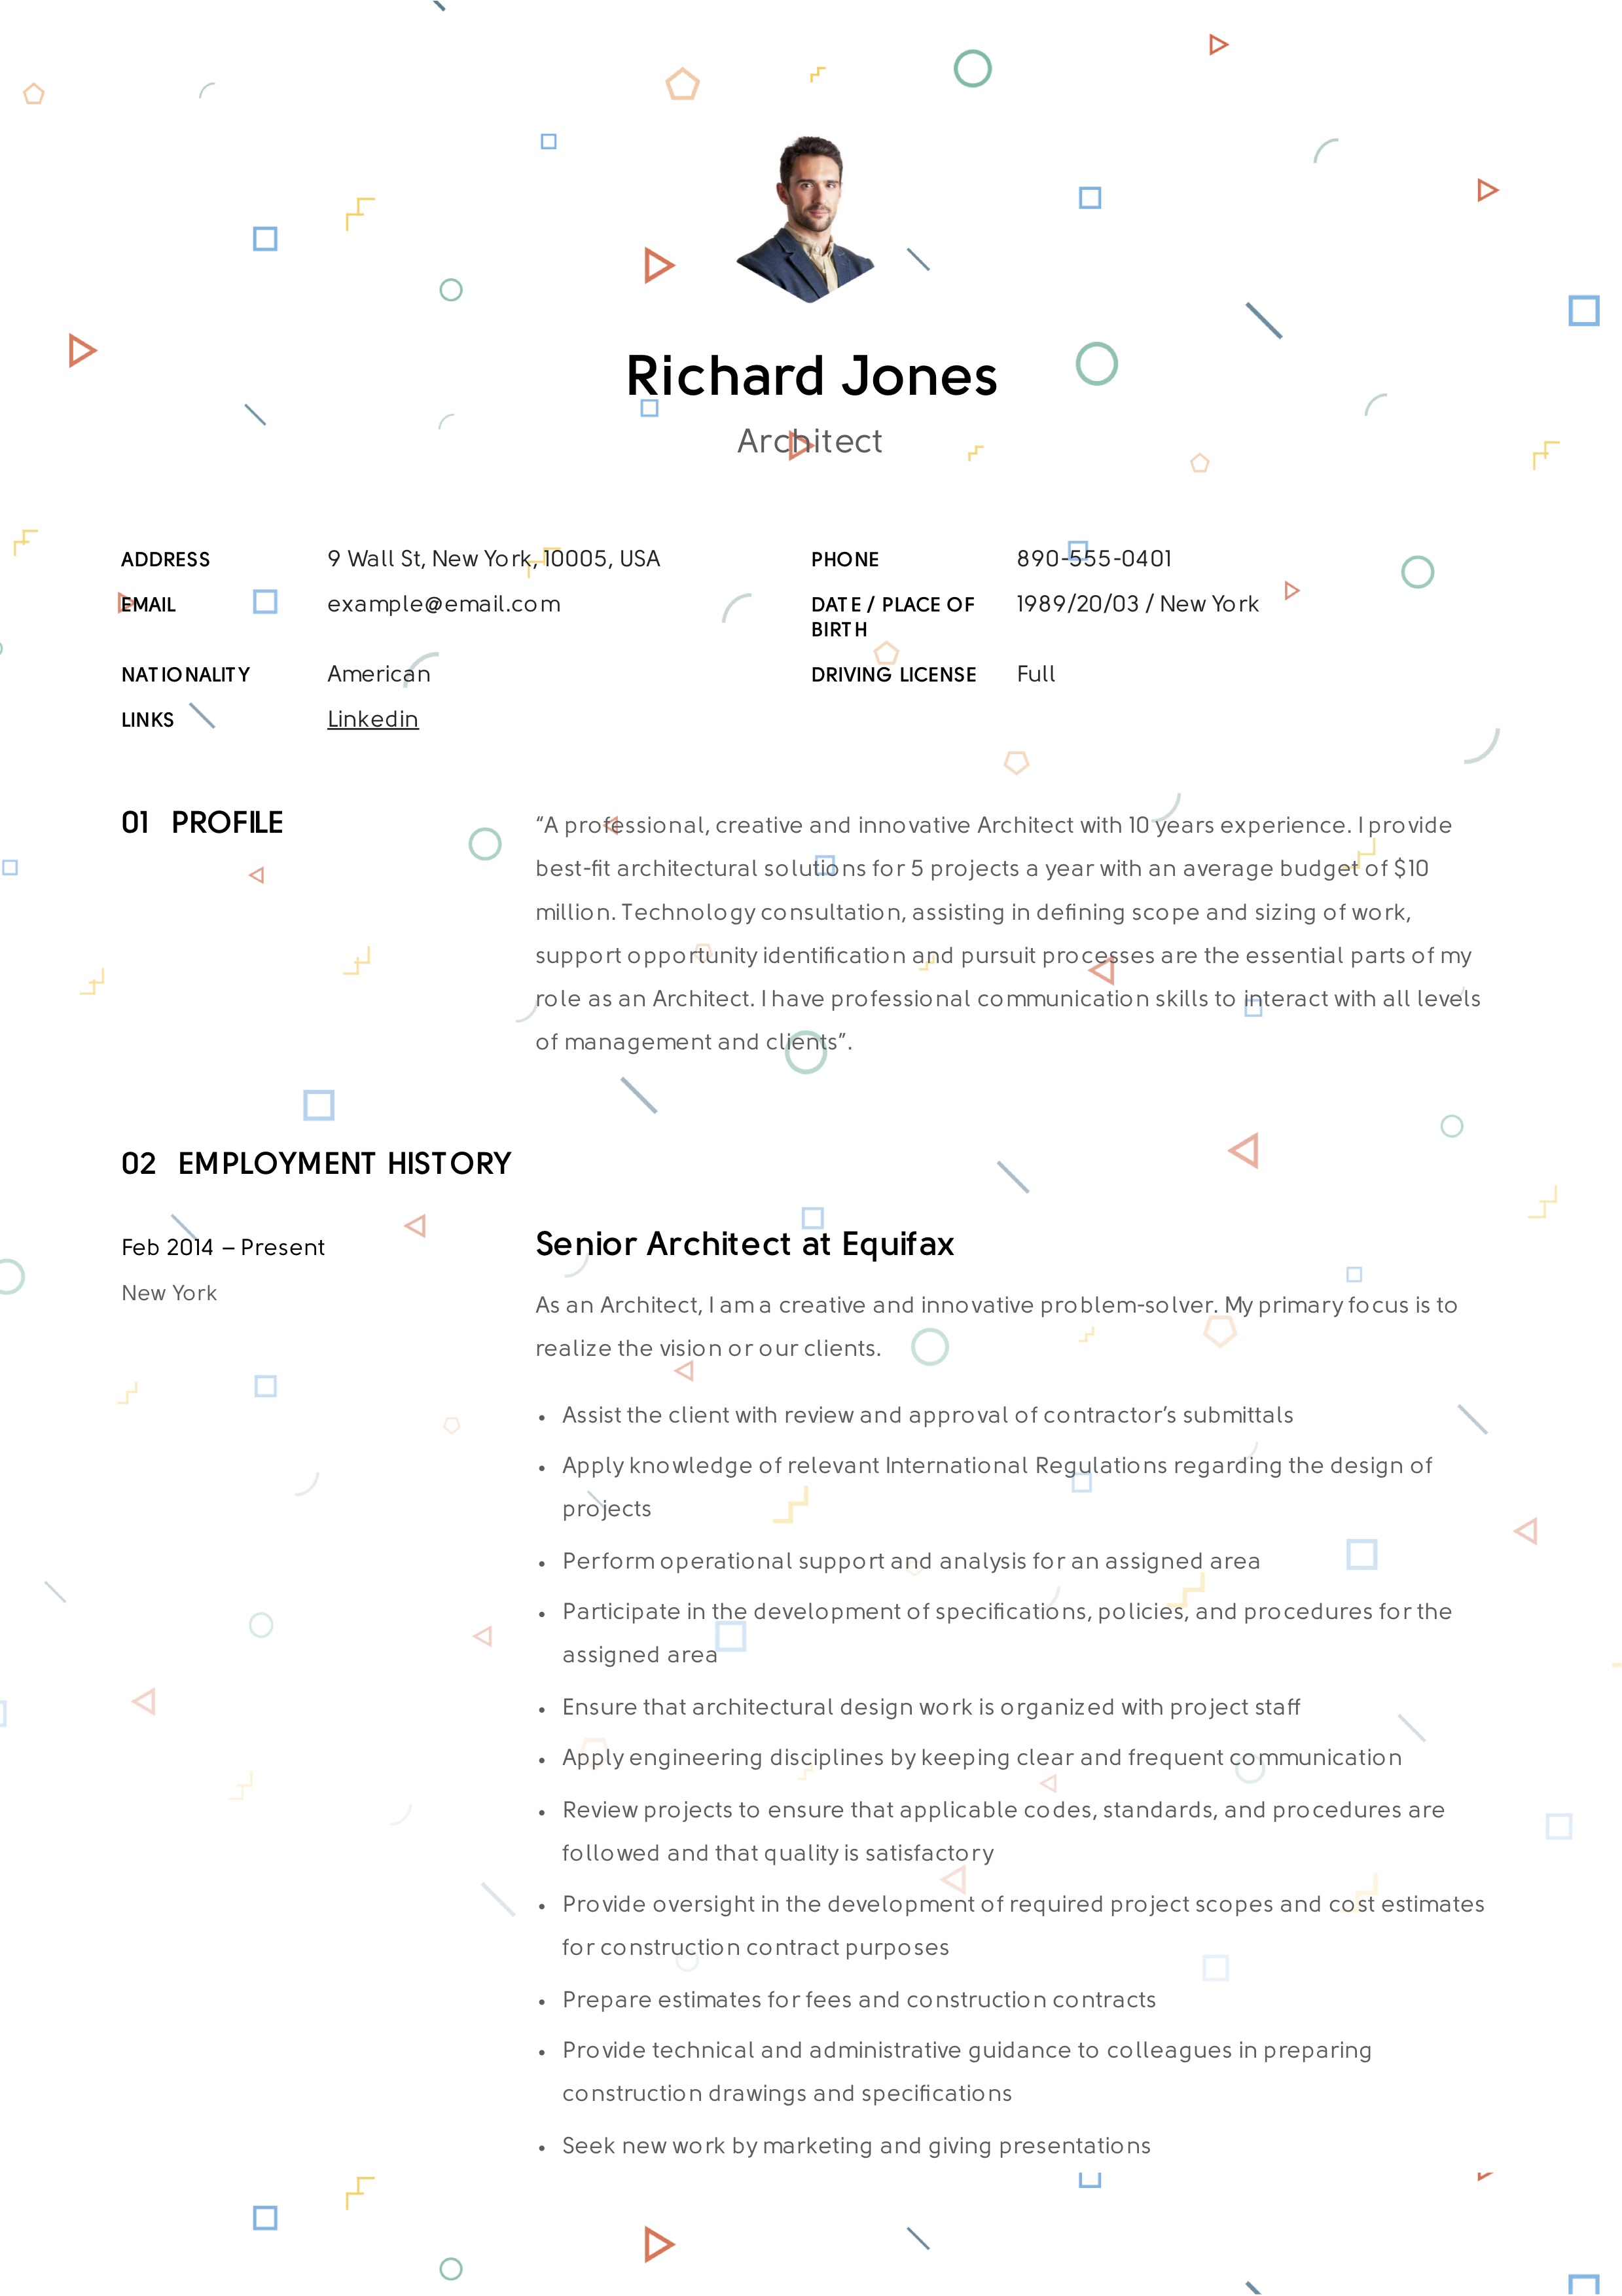 Architect Resume Sample Richard Jones (7)